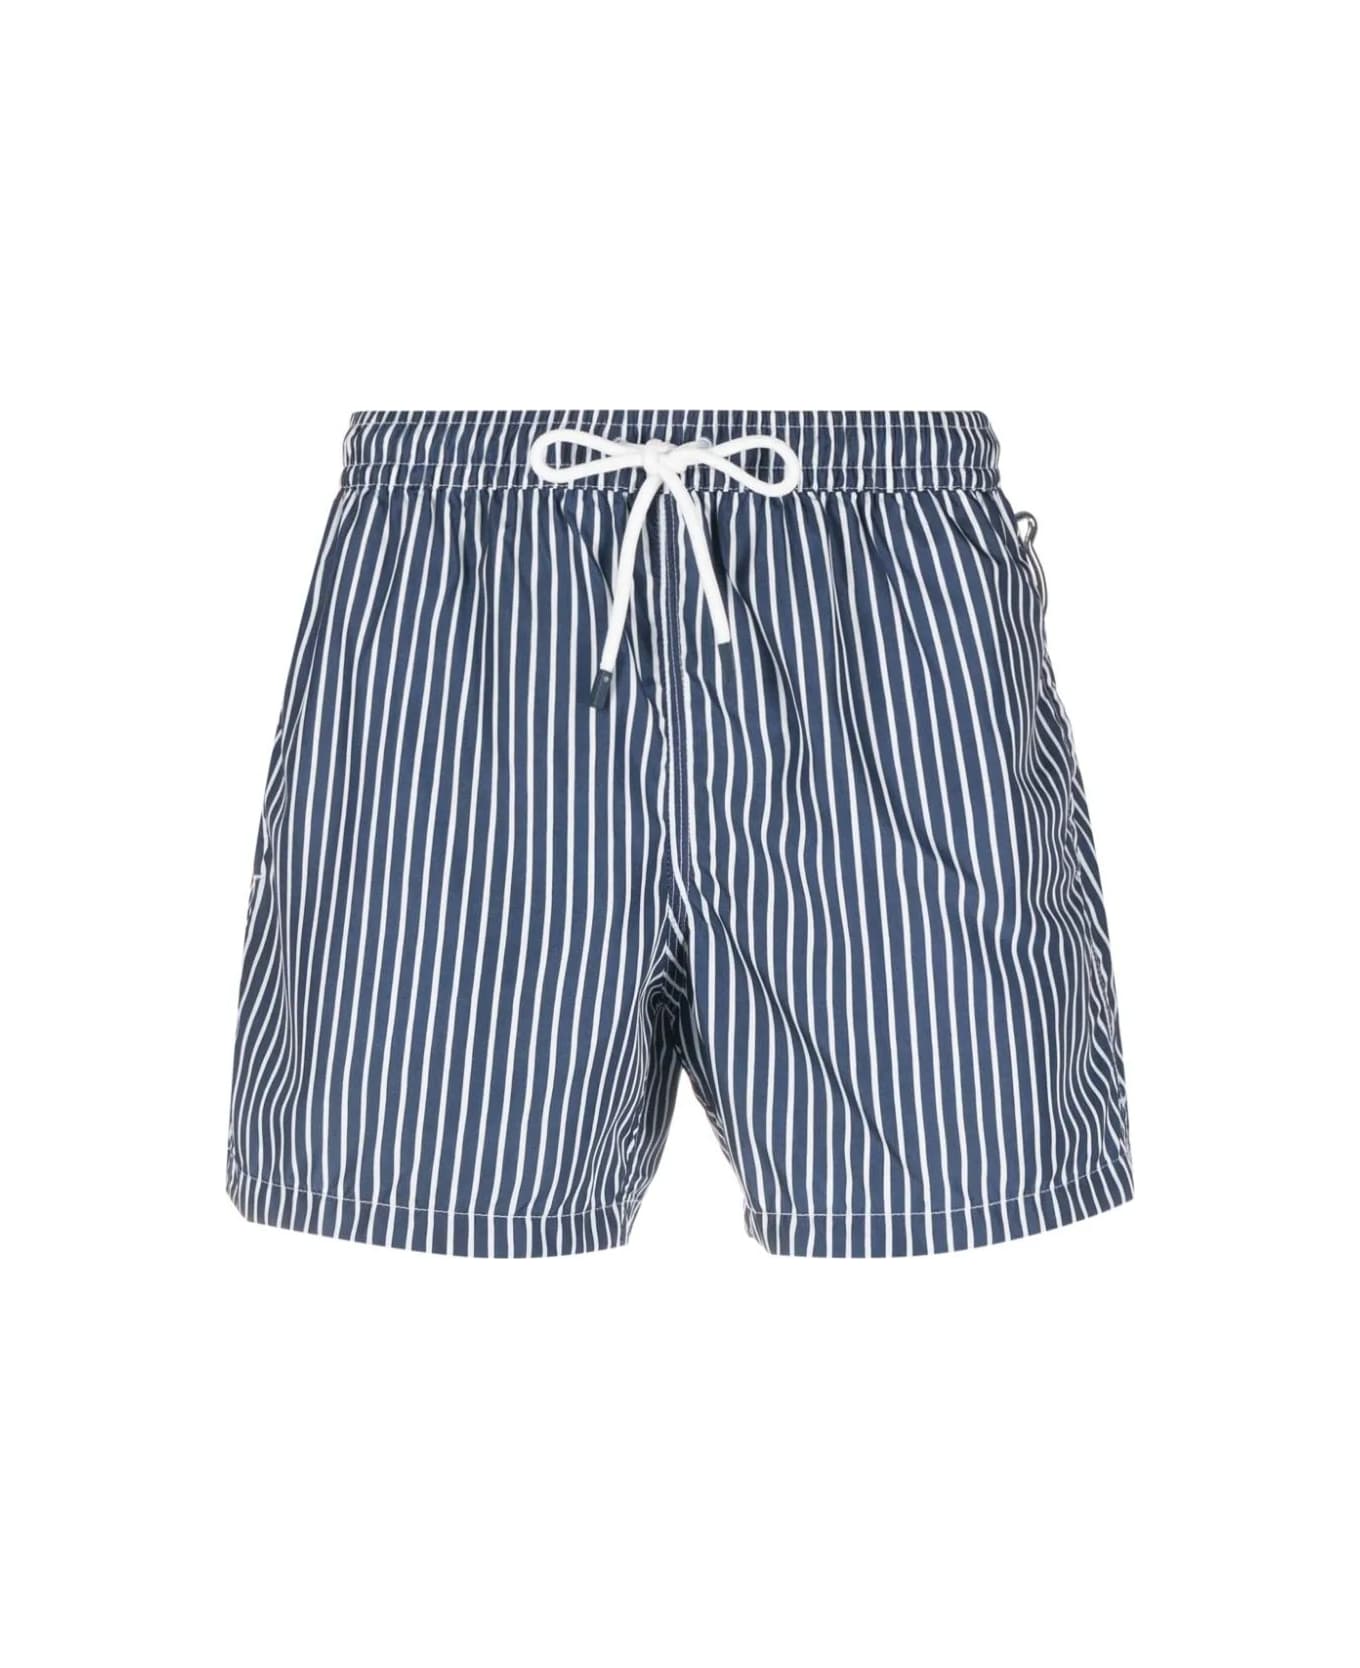 Fedeli Navy Blue And White Striped Swim Shorts - Blue スイムトランクス